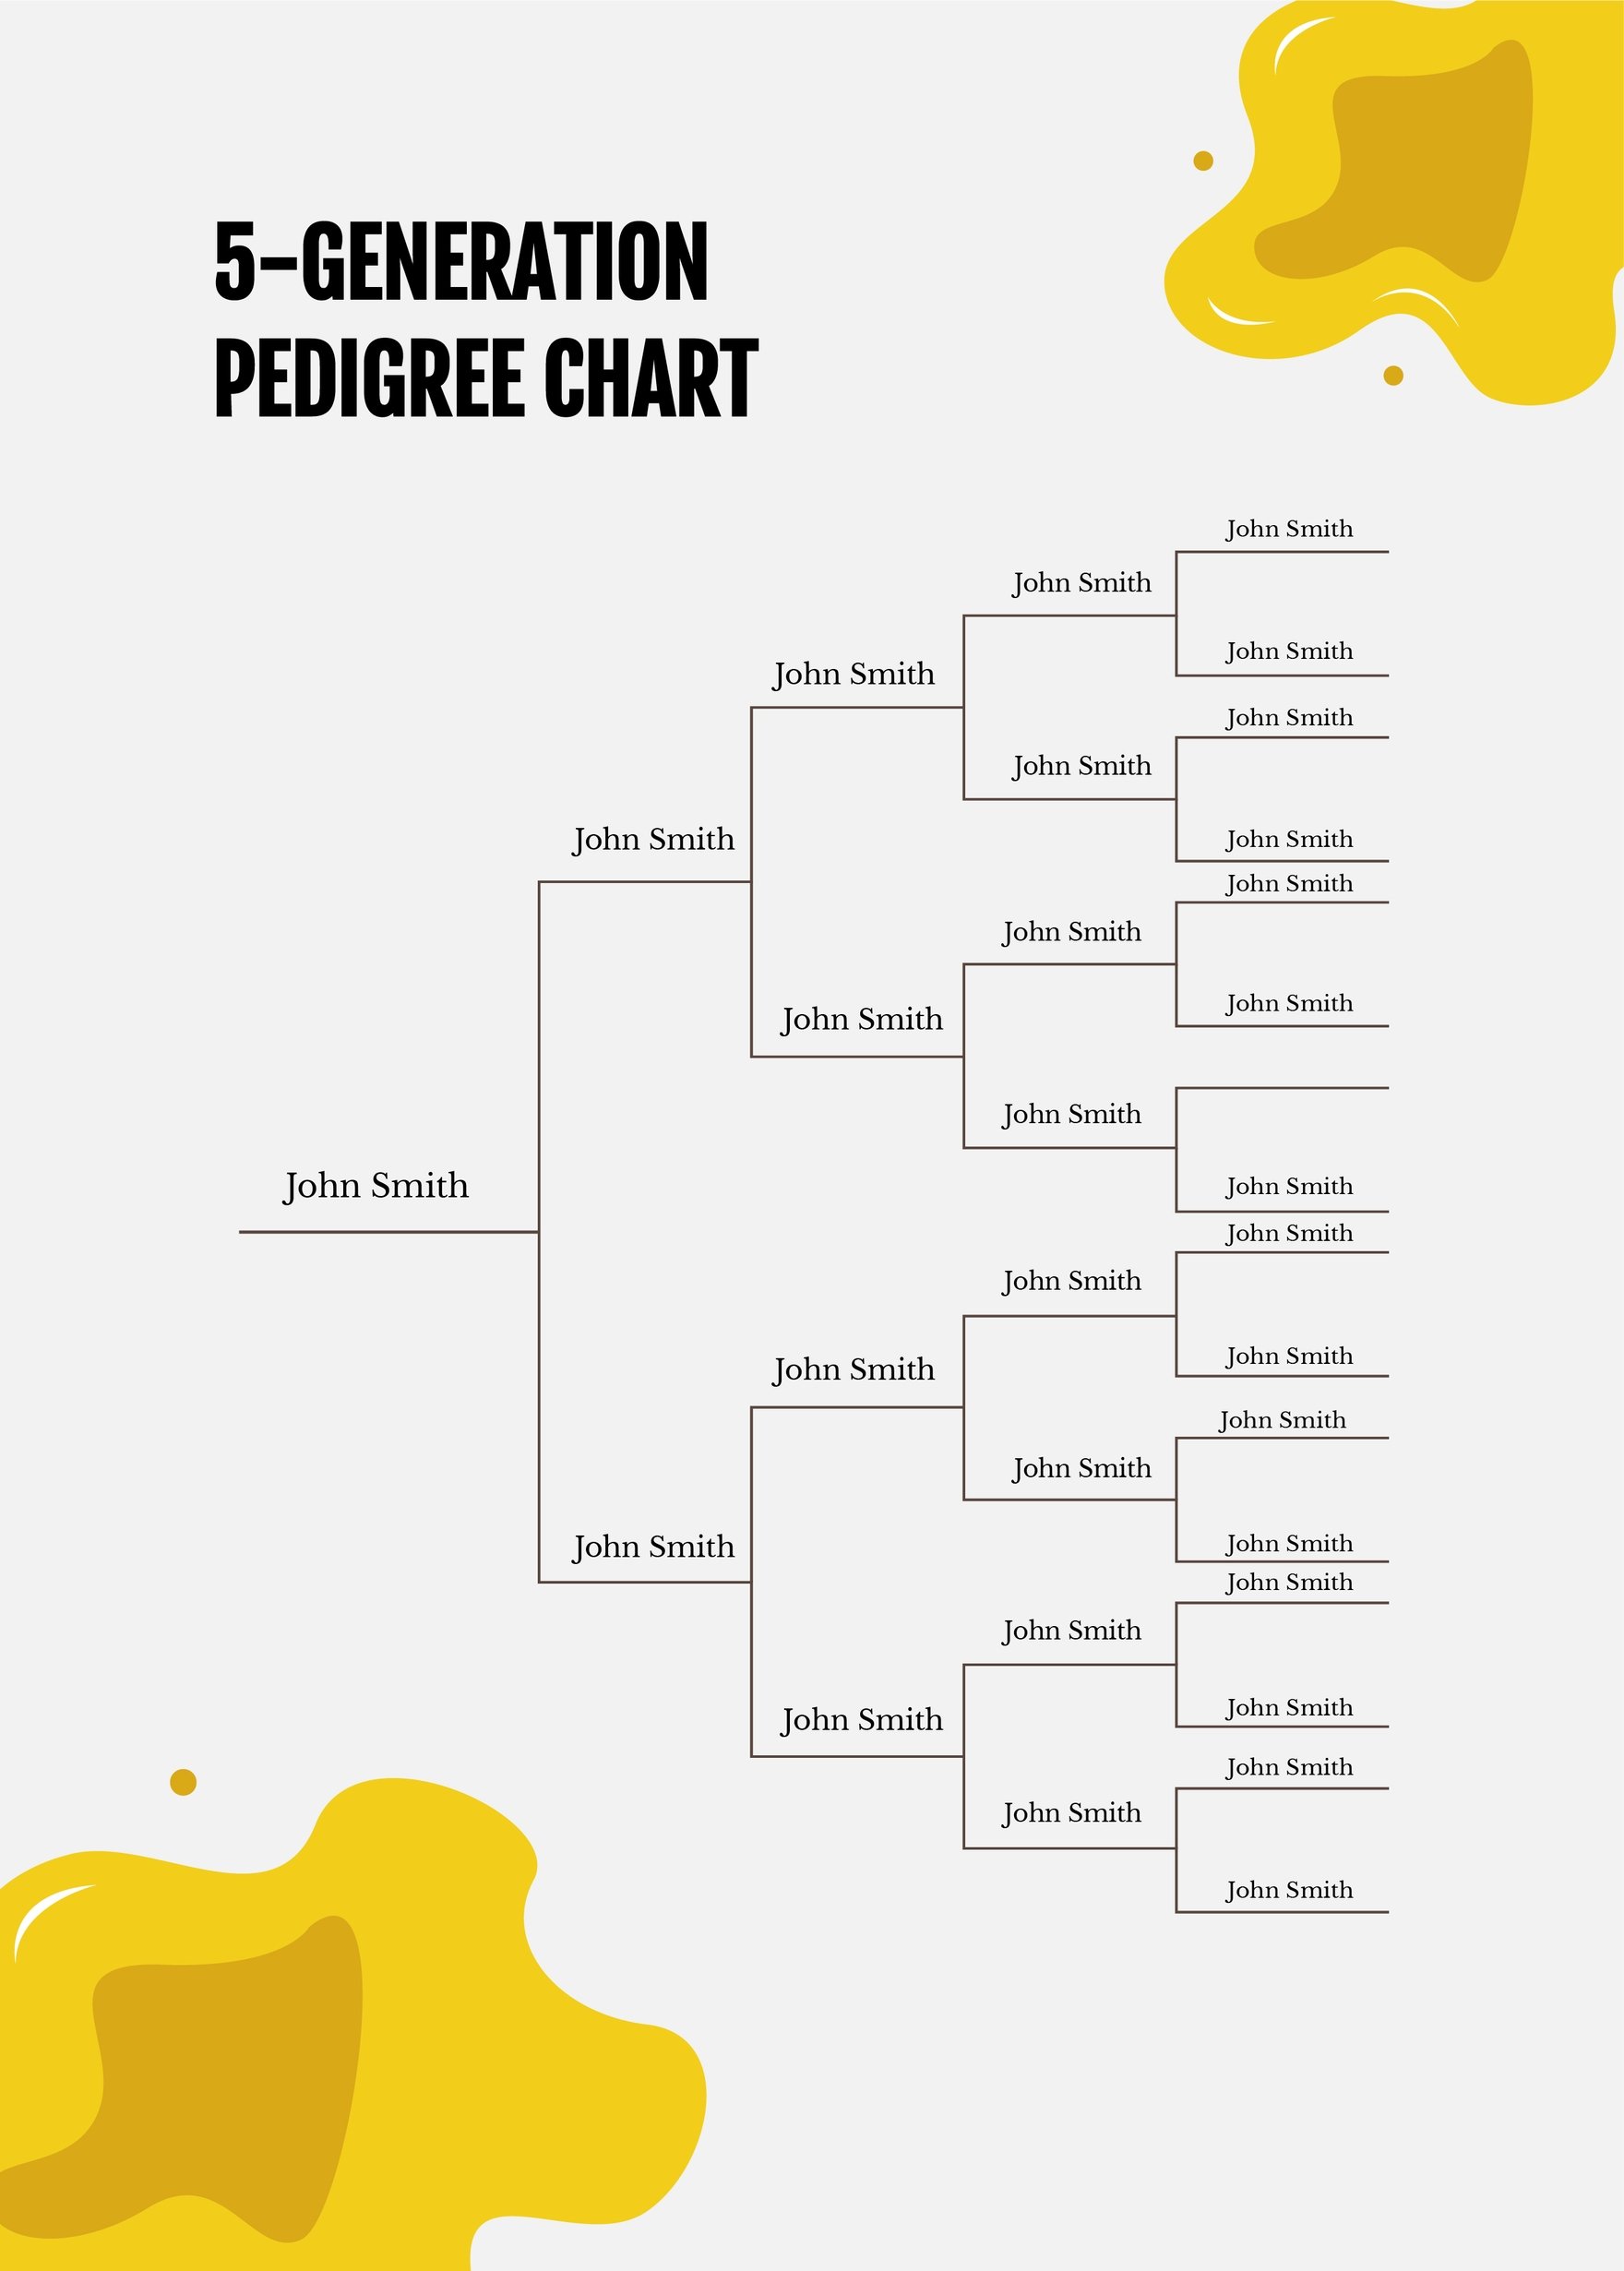 5-Generation Pedigree Chart